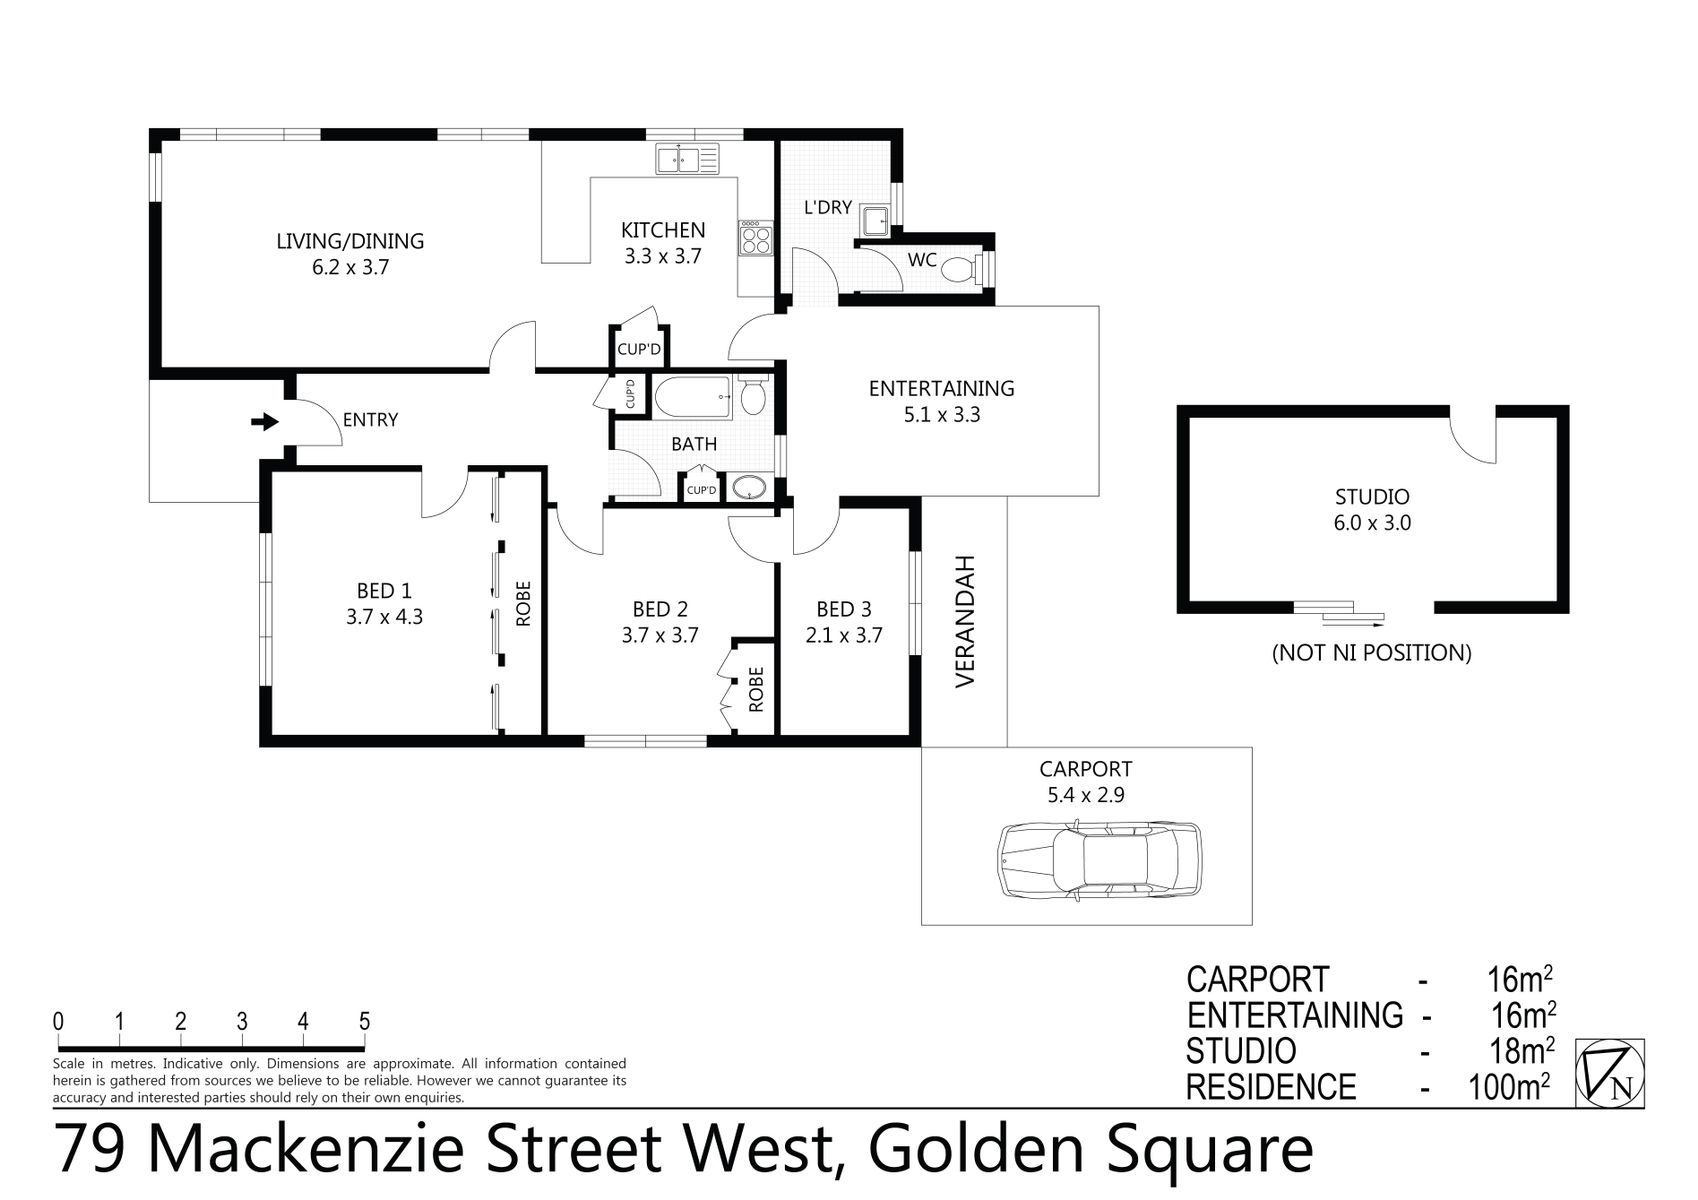 79 Mackenzie Street West, Golden Square (12 JANUARY 2018) 100sqm